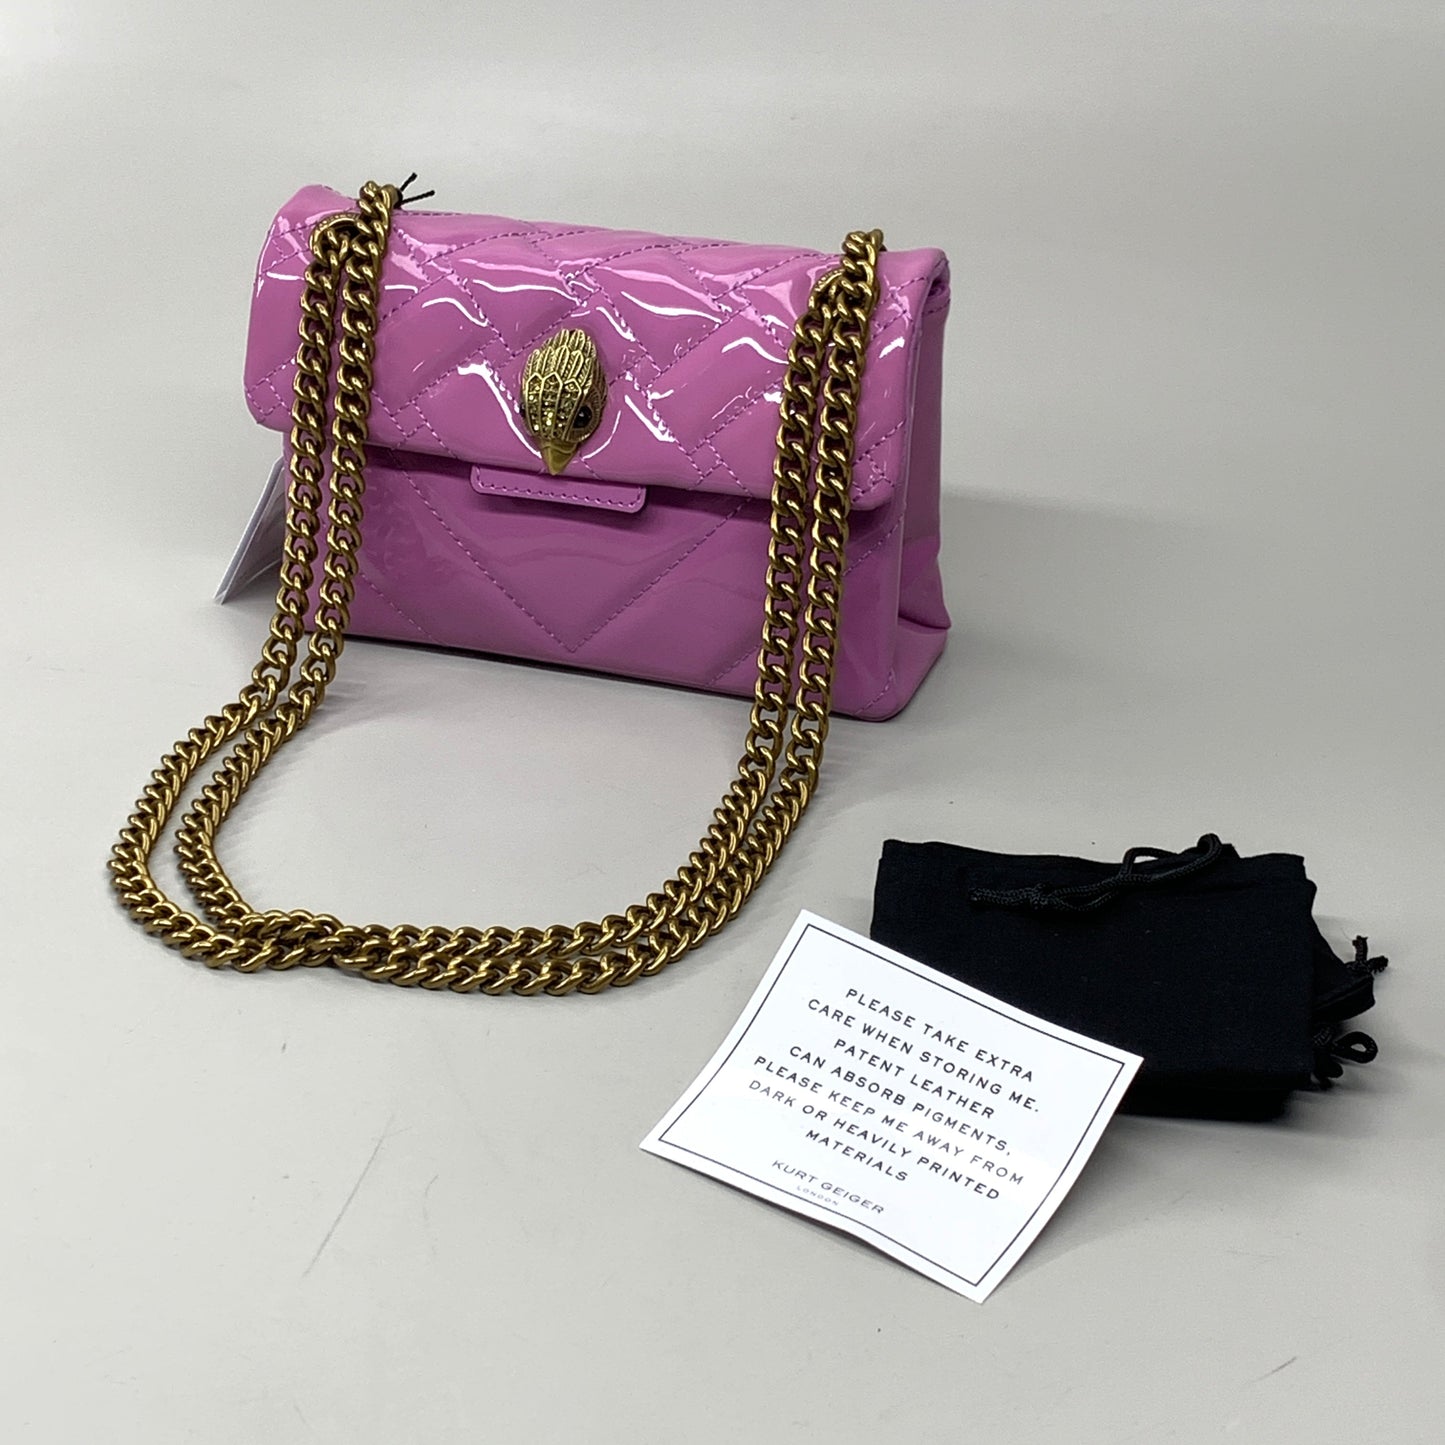 KURT GEIGER Mini Kensington Leather Evening Bag 8" x 6" Purple 0846390309 New